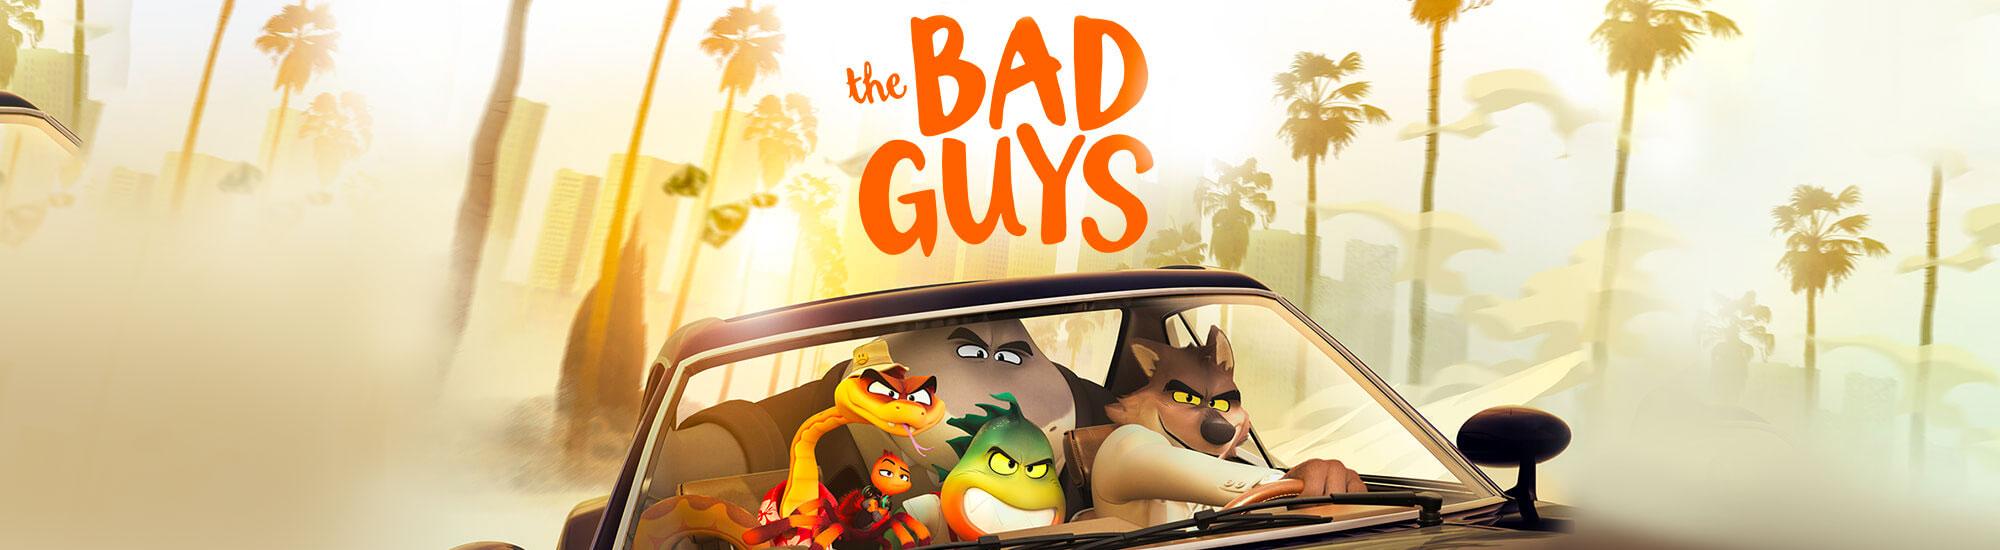 bad guys movie banner